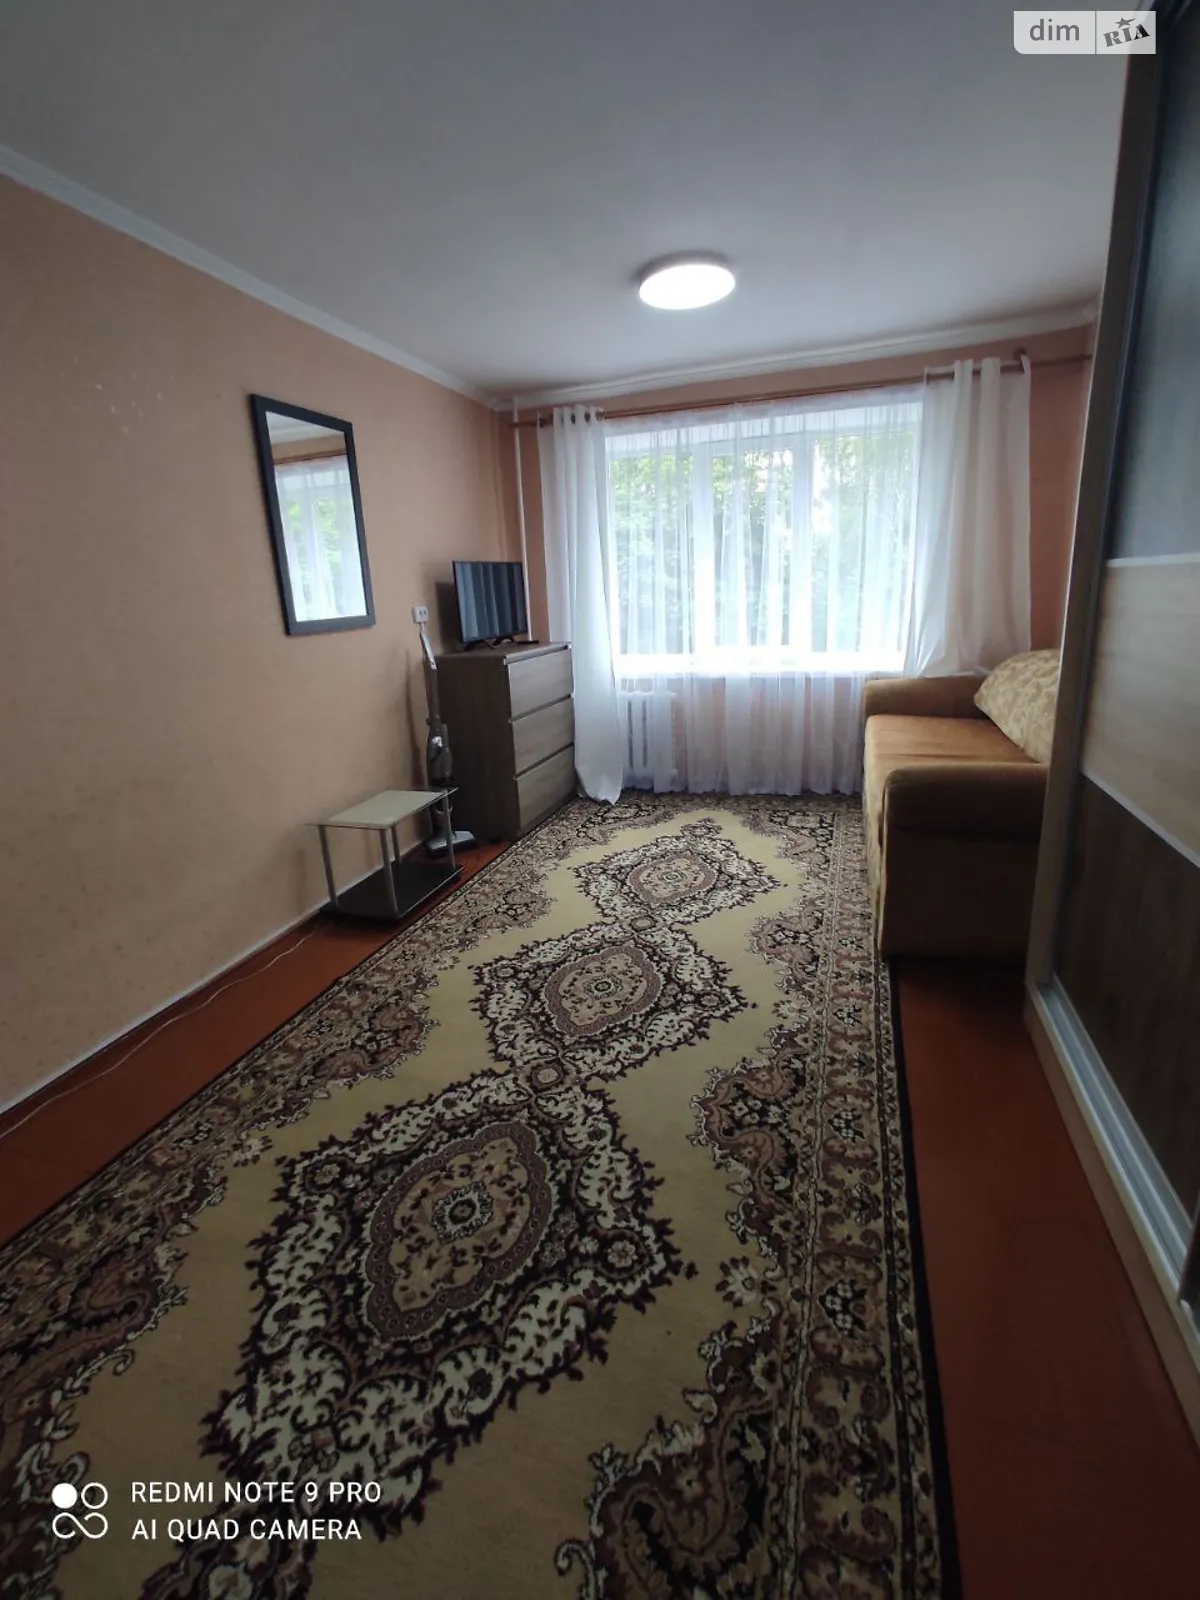 Сдается в аренду комната 18 кв. м в Ровно - фото 2